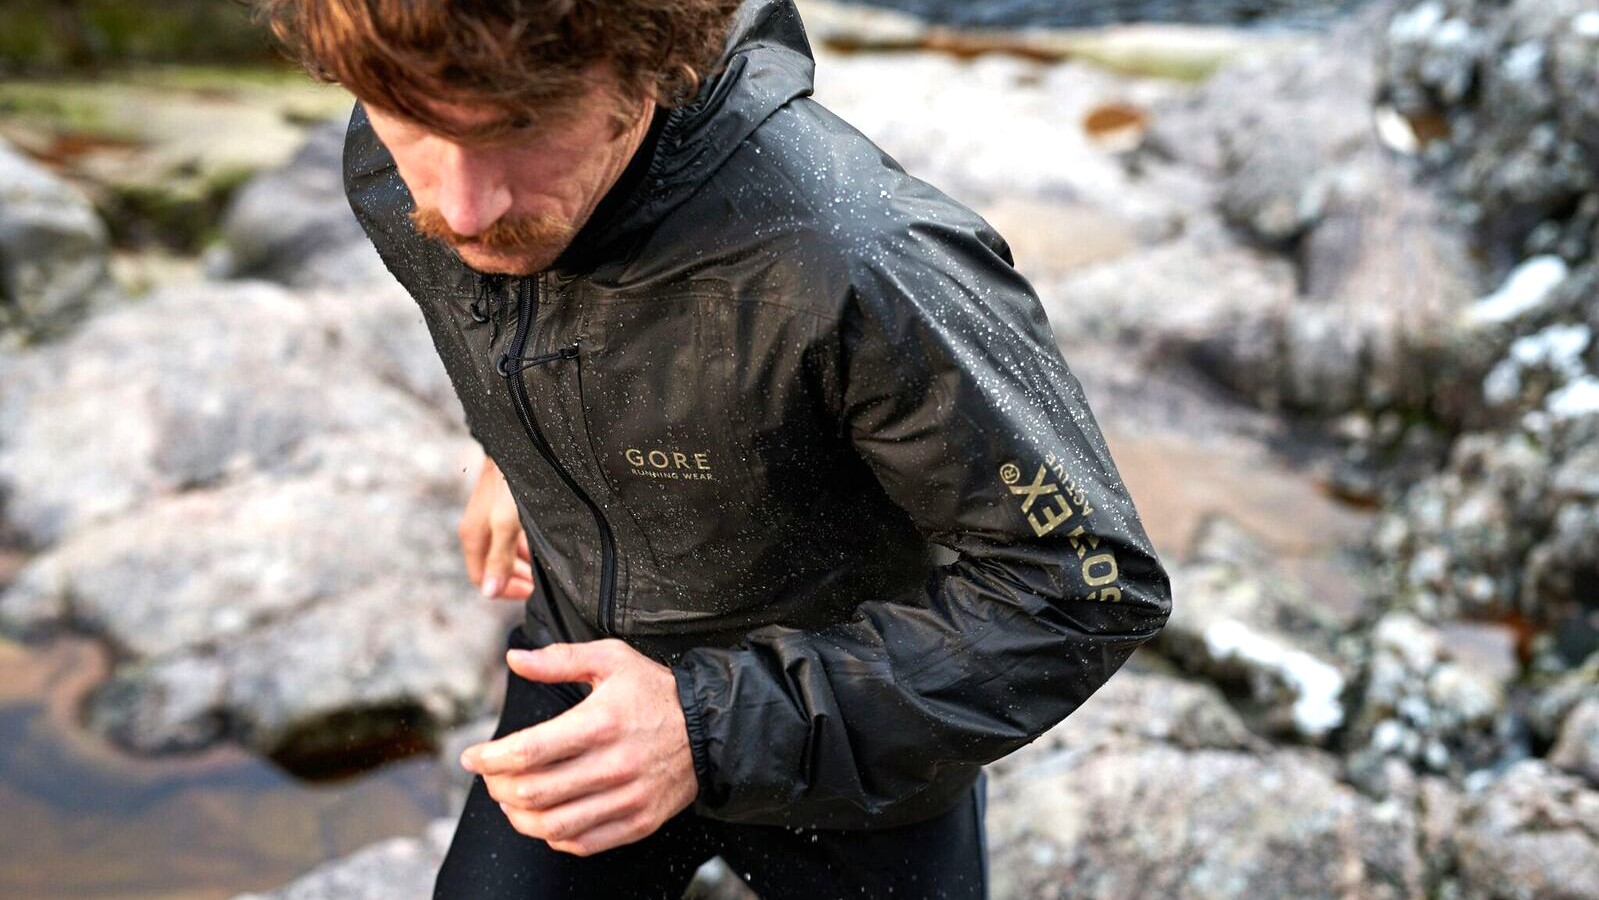 kalenji waterproof trail jacket review